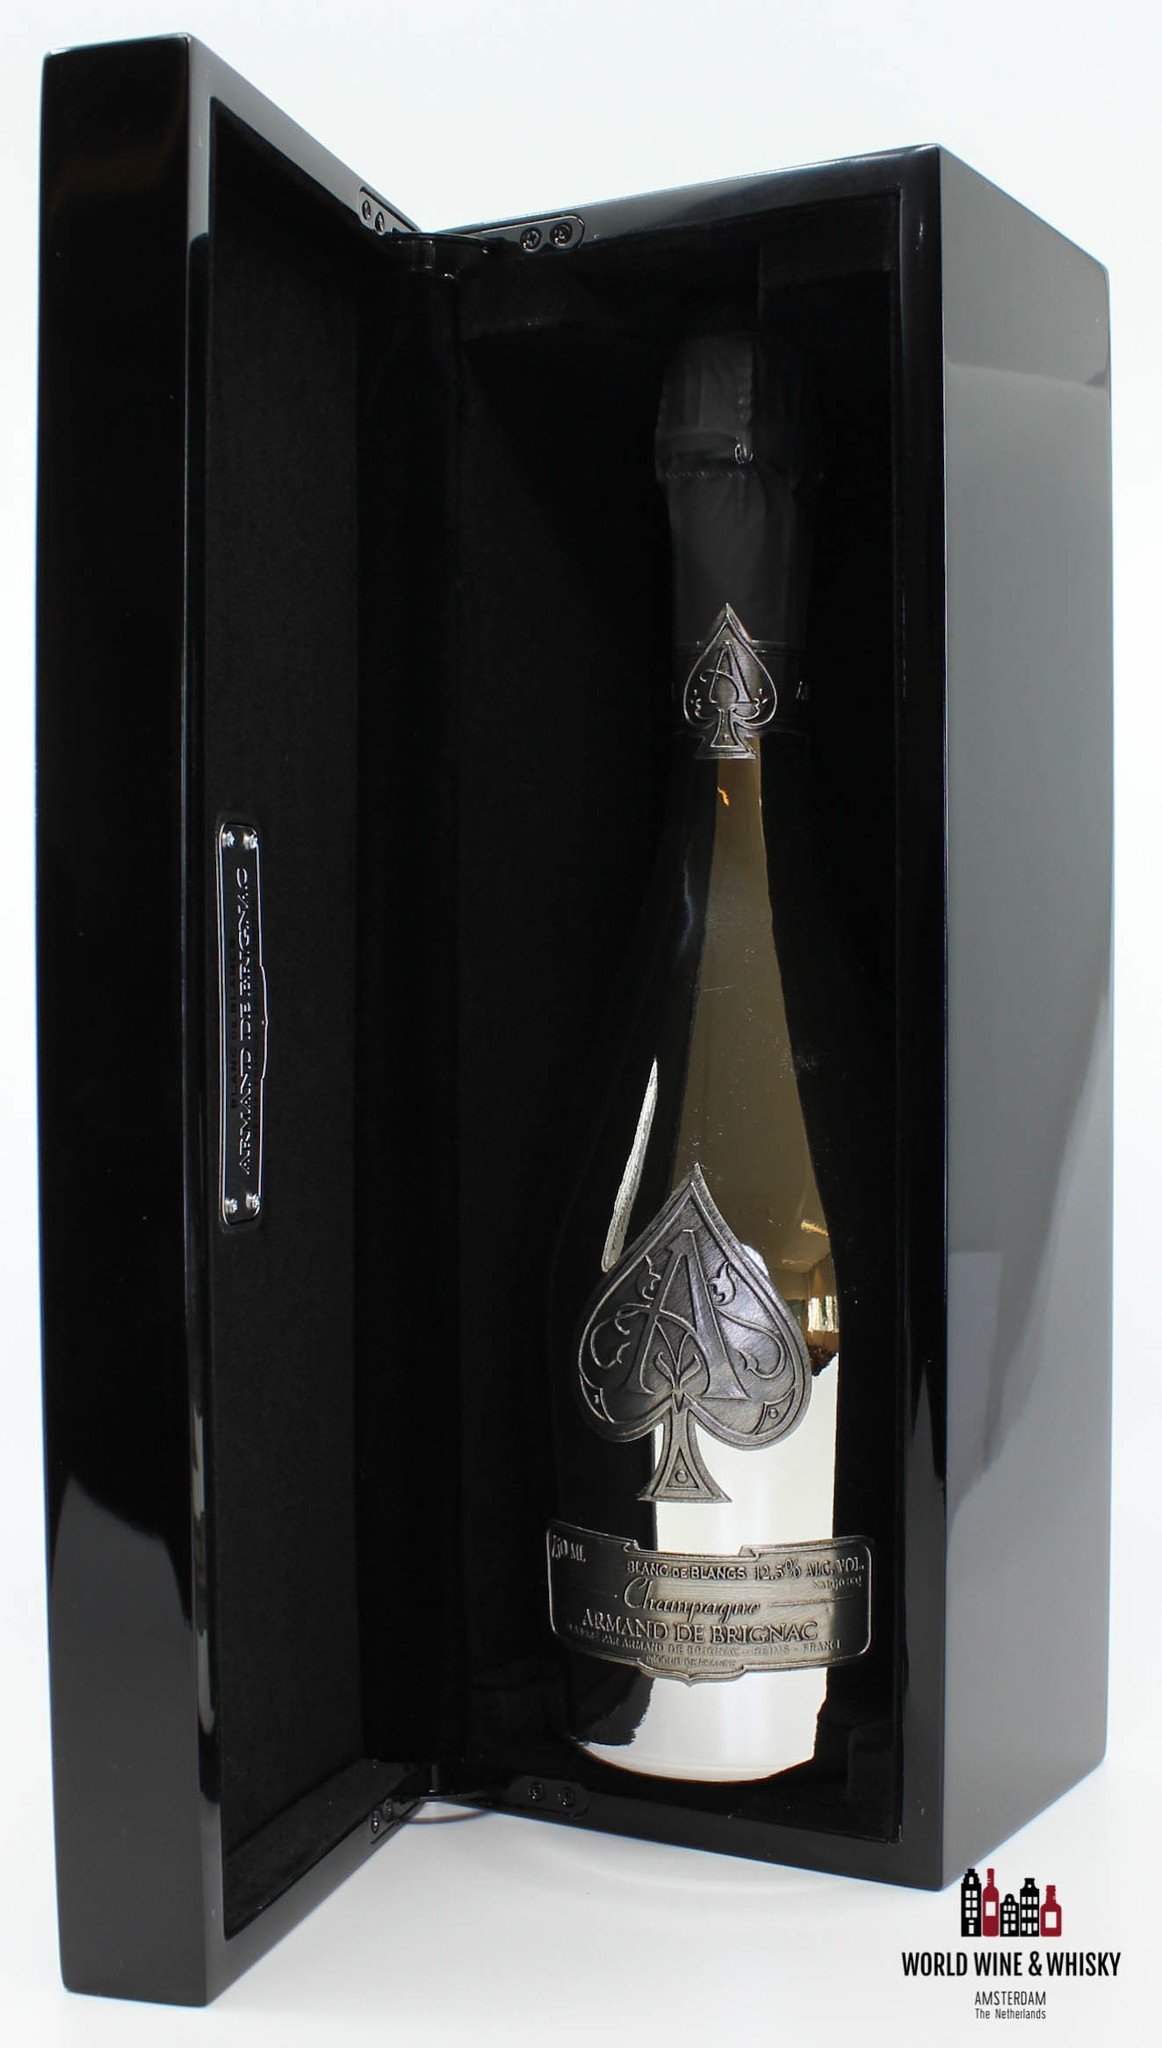 Armand de Brignac Armand de Brignac Blanc de Blancs Champagne Brut 12.5% - in luxury case (750 ml)